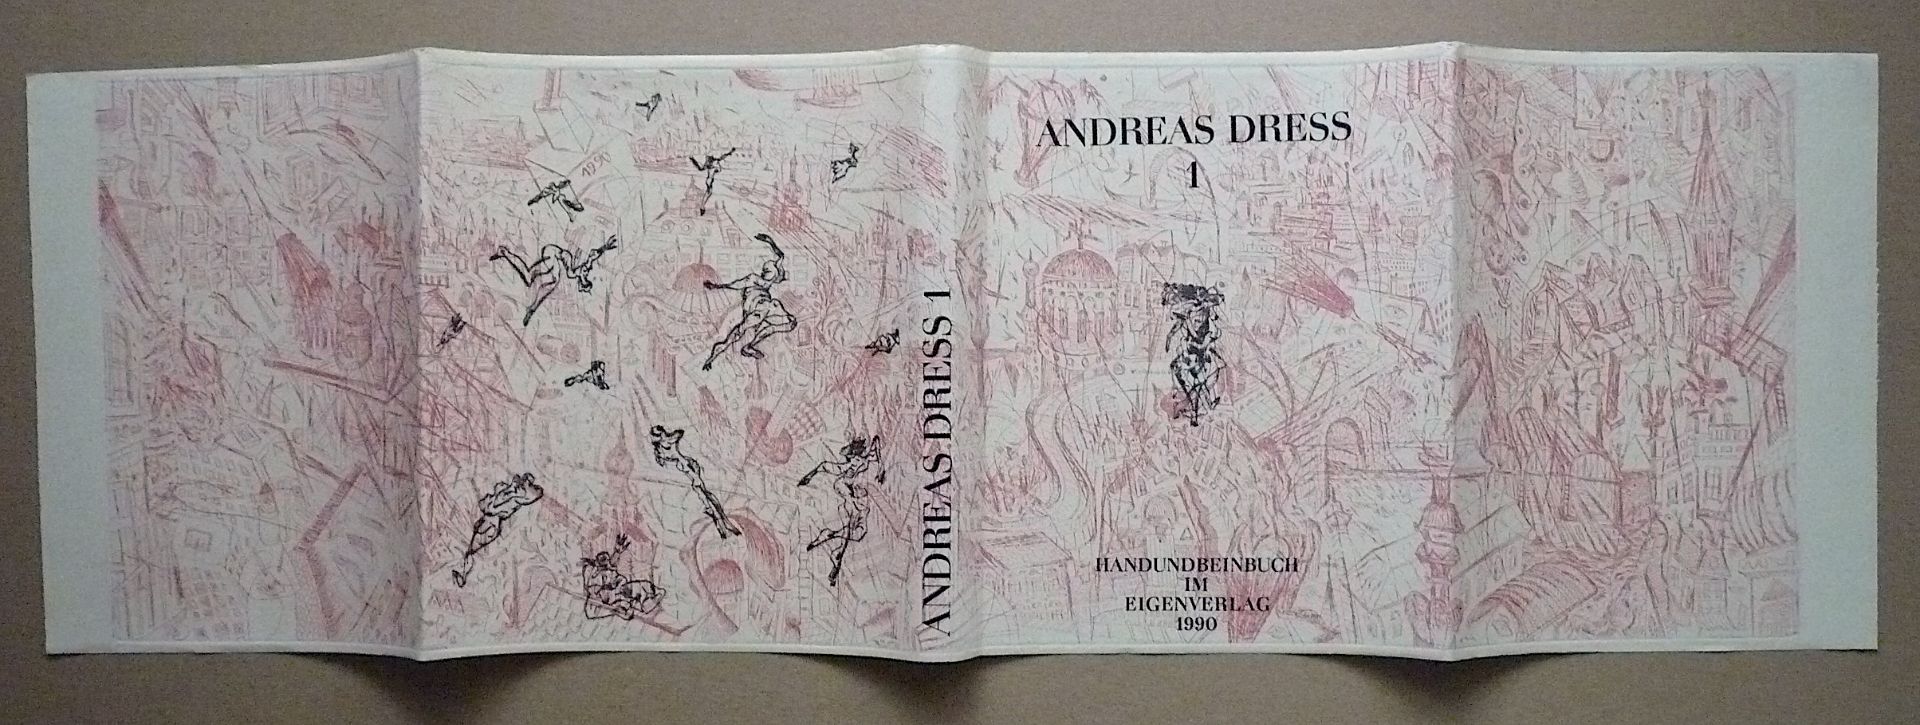 DRESS, ANDREAS: "HandundBeinbuch", 1990 - Image 2 of 7